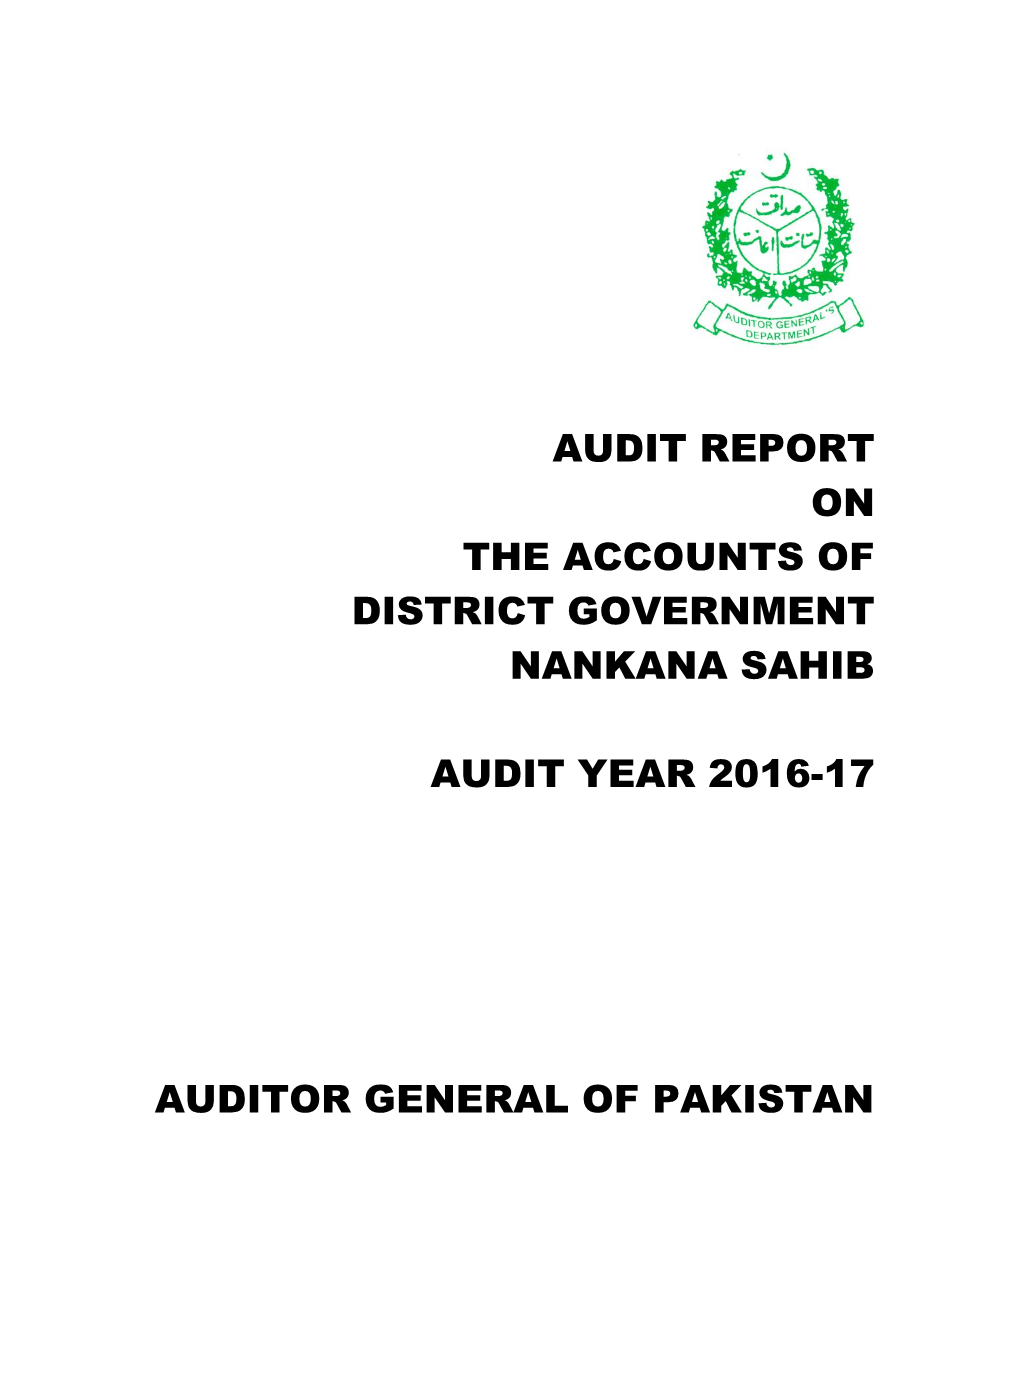 Audit Report on the Accounts of District Government Nankana Sahib